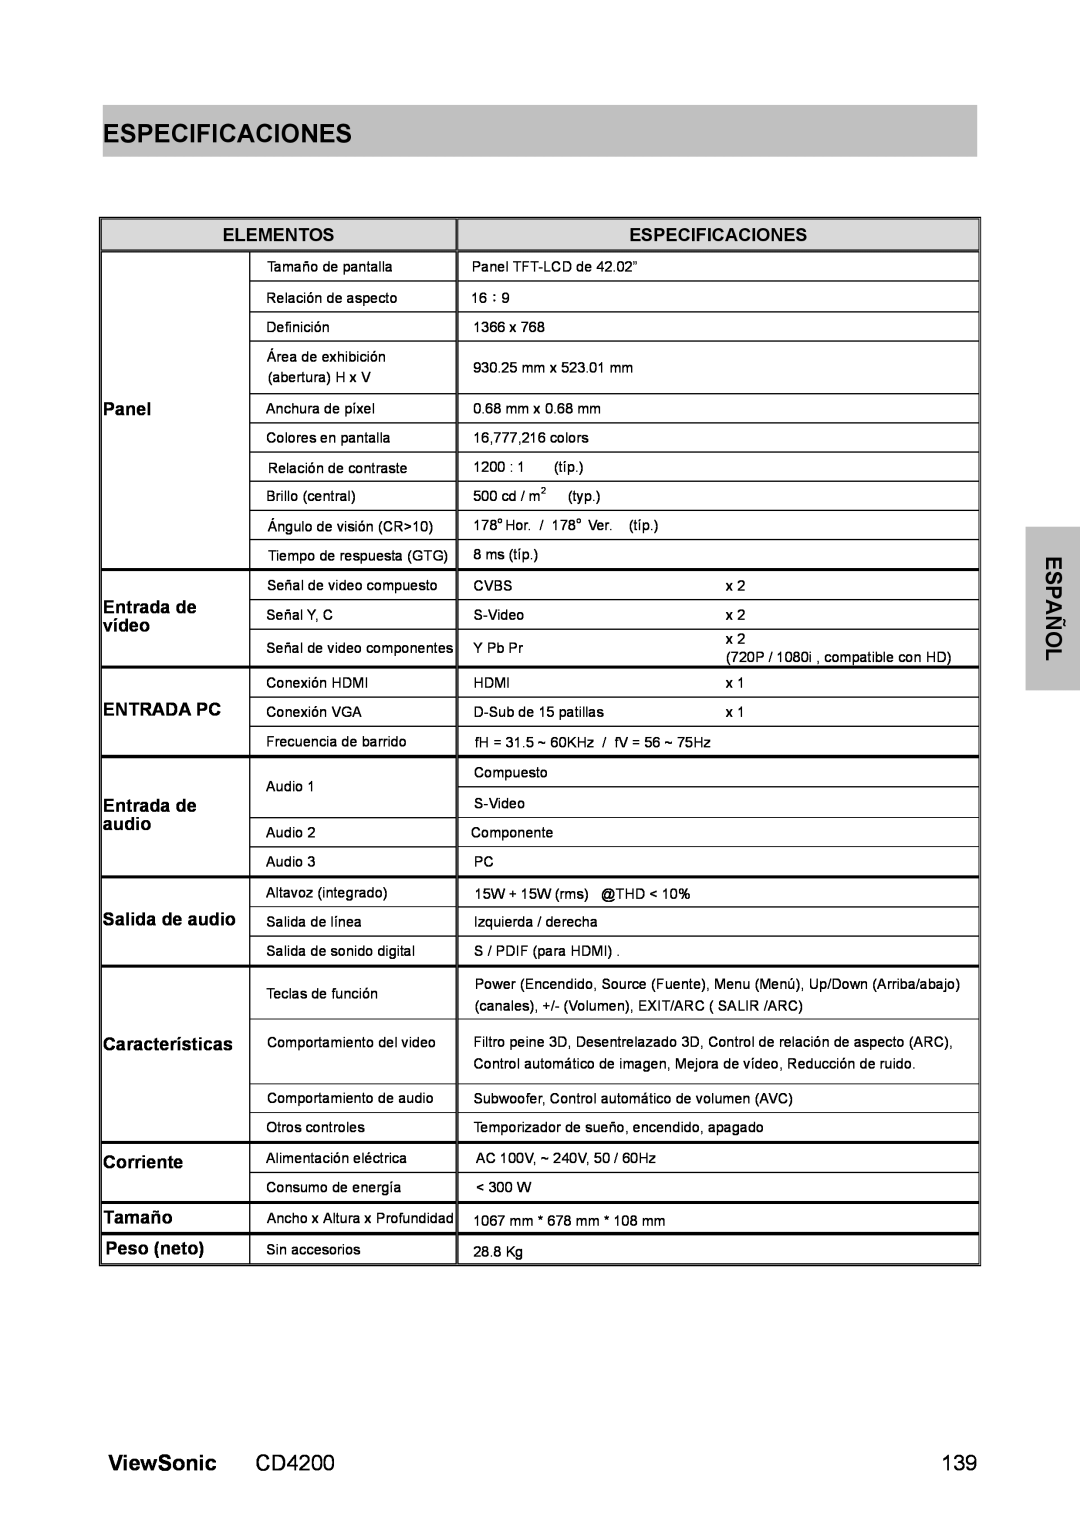 ViewSonic manual Especificaciones, Español, ViewSonic CD4200 